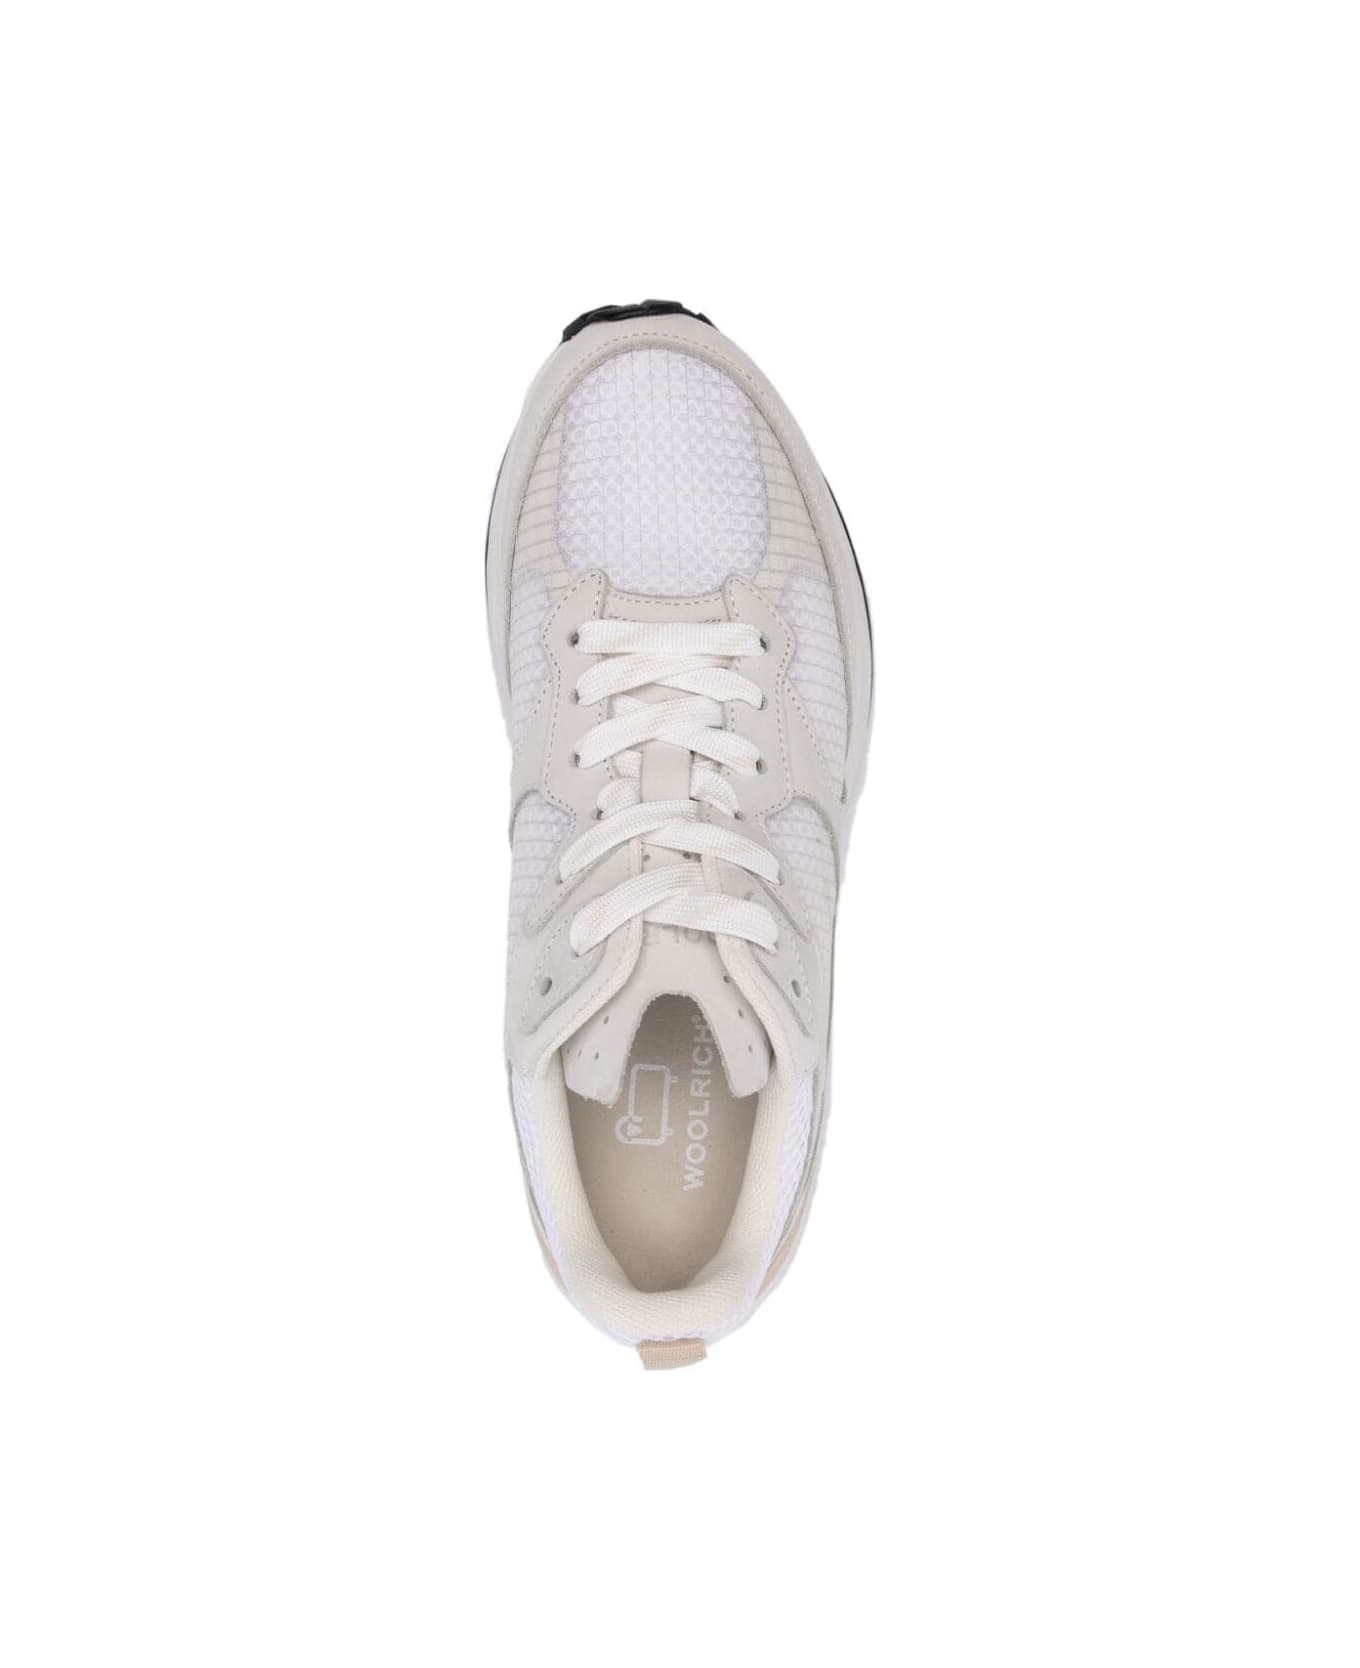 Woolrich Running Sneakers - White White スニーカー